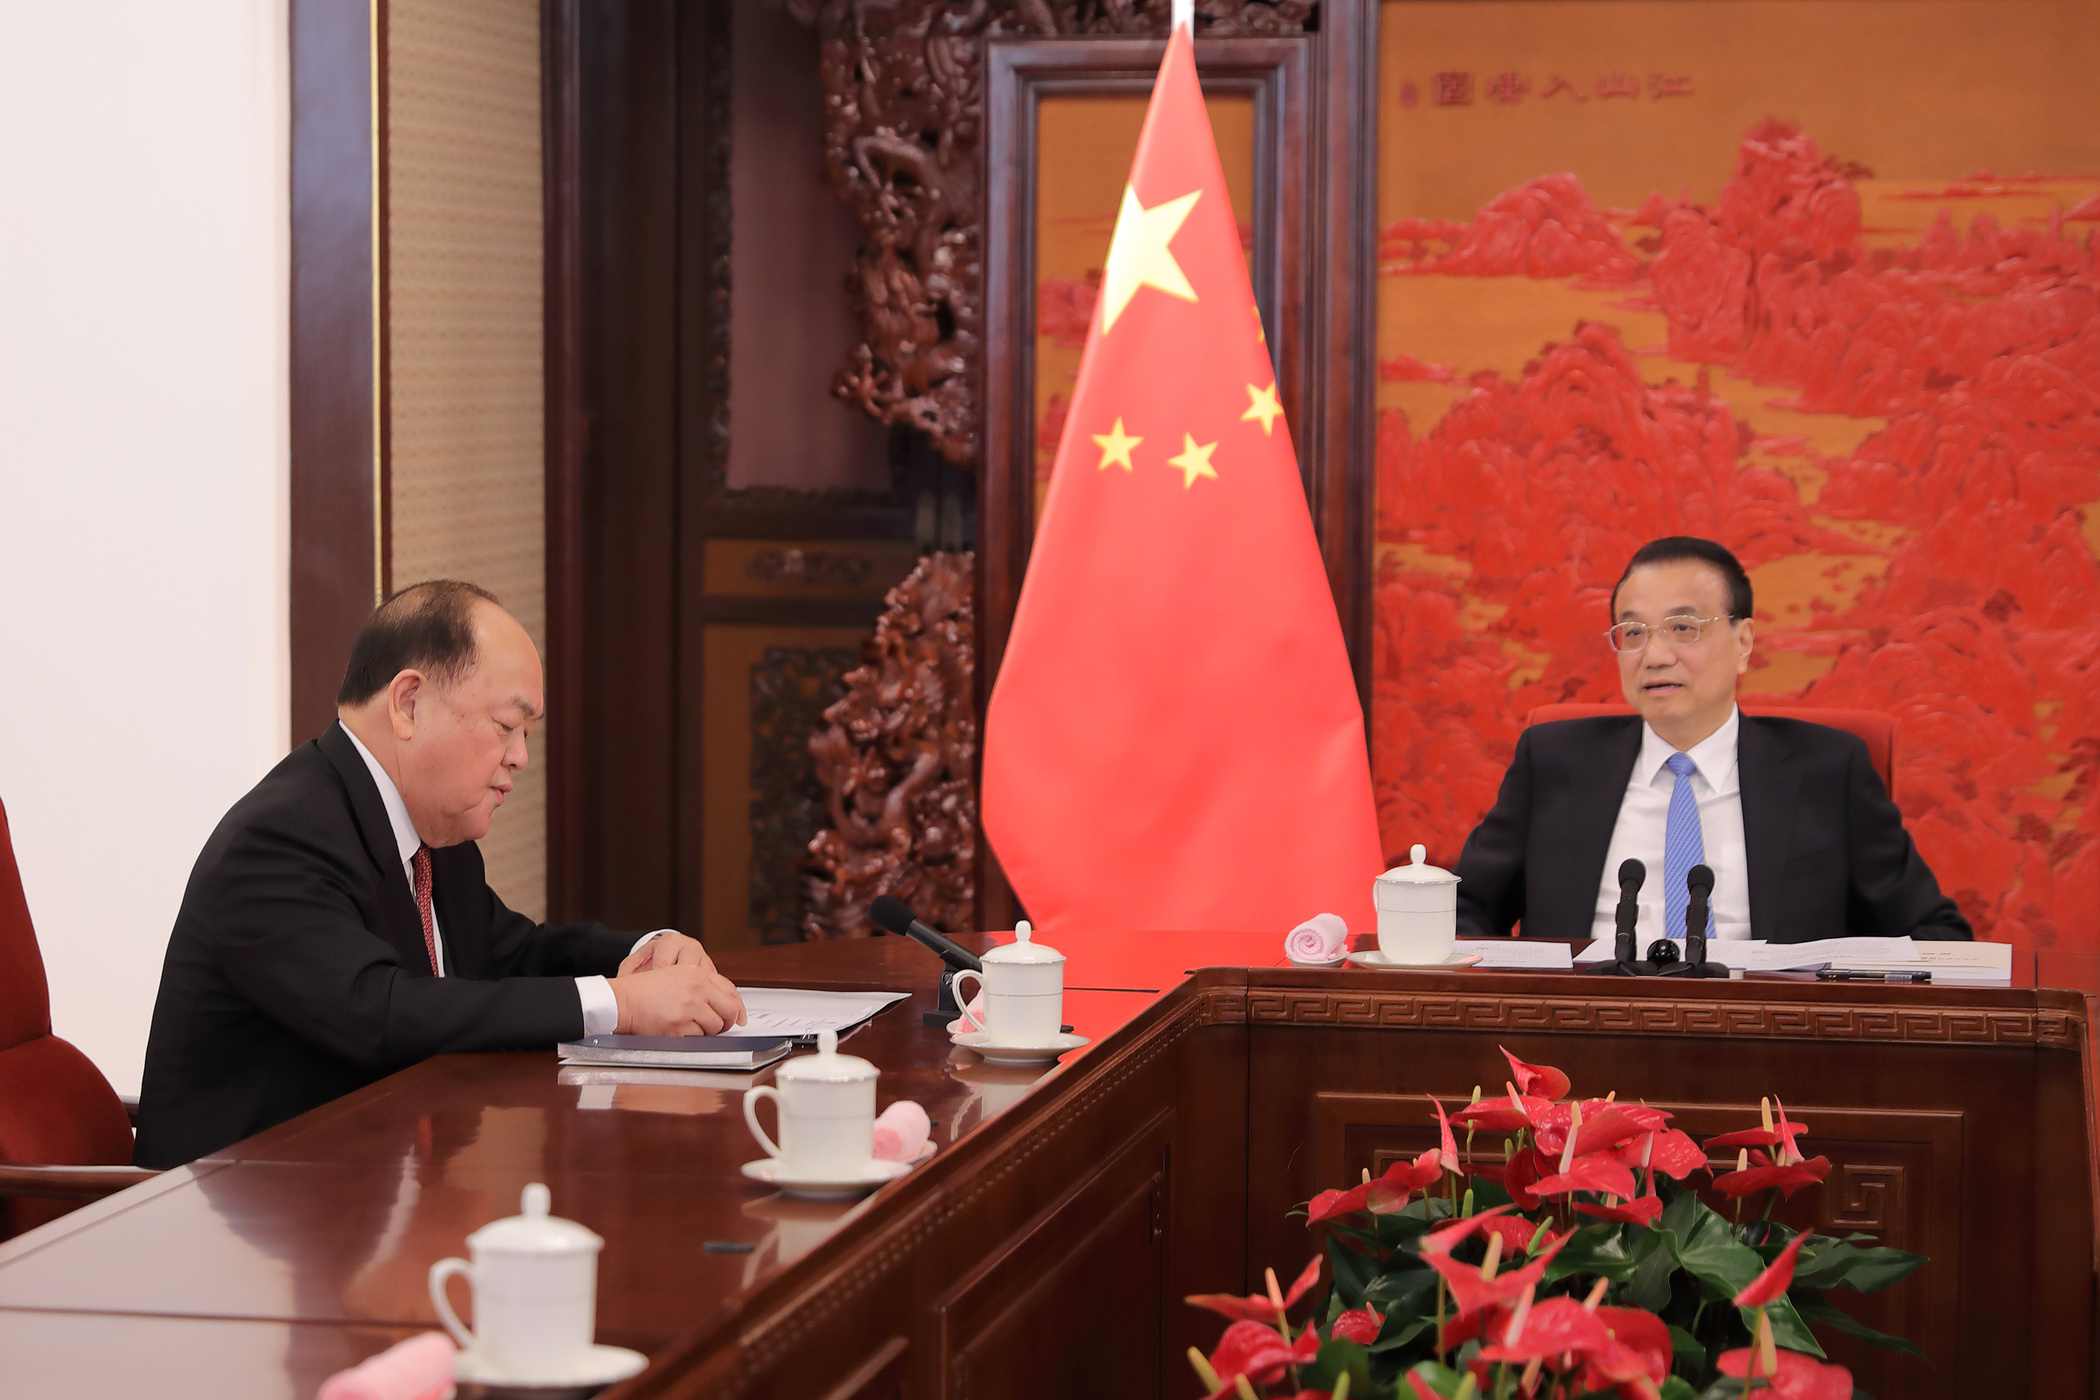 Premier Li Keqiang and Chief Executive Ho Iat Seng